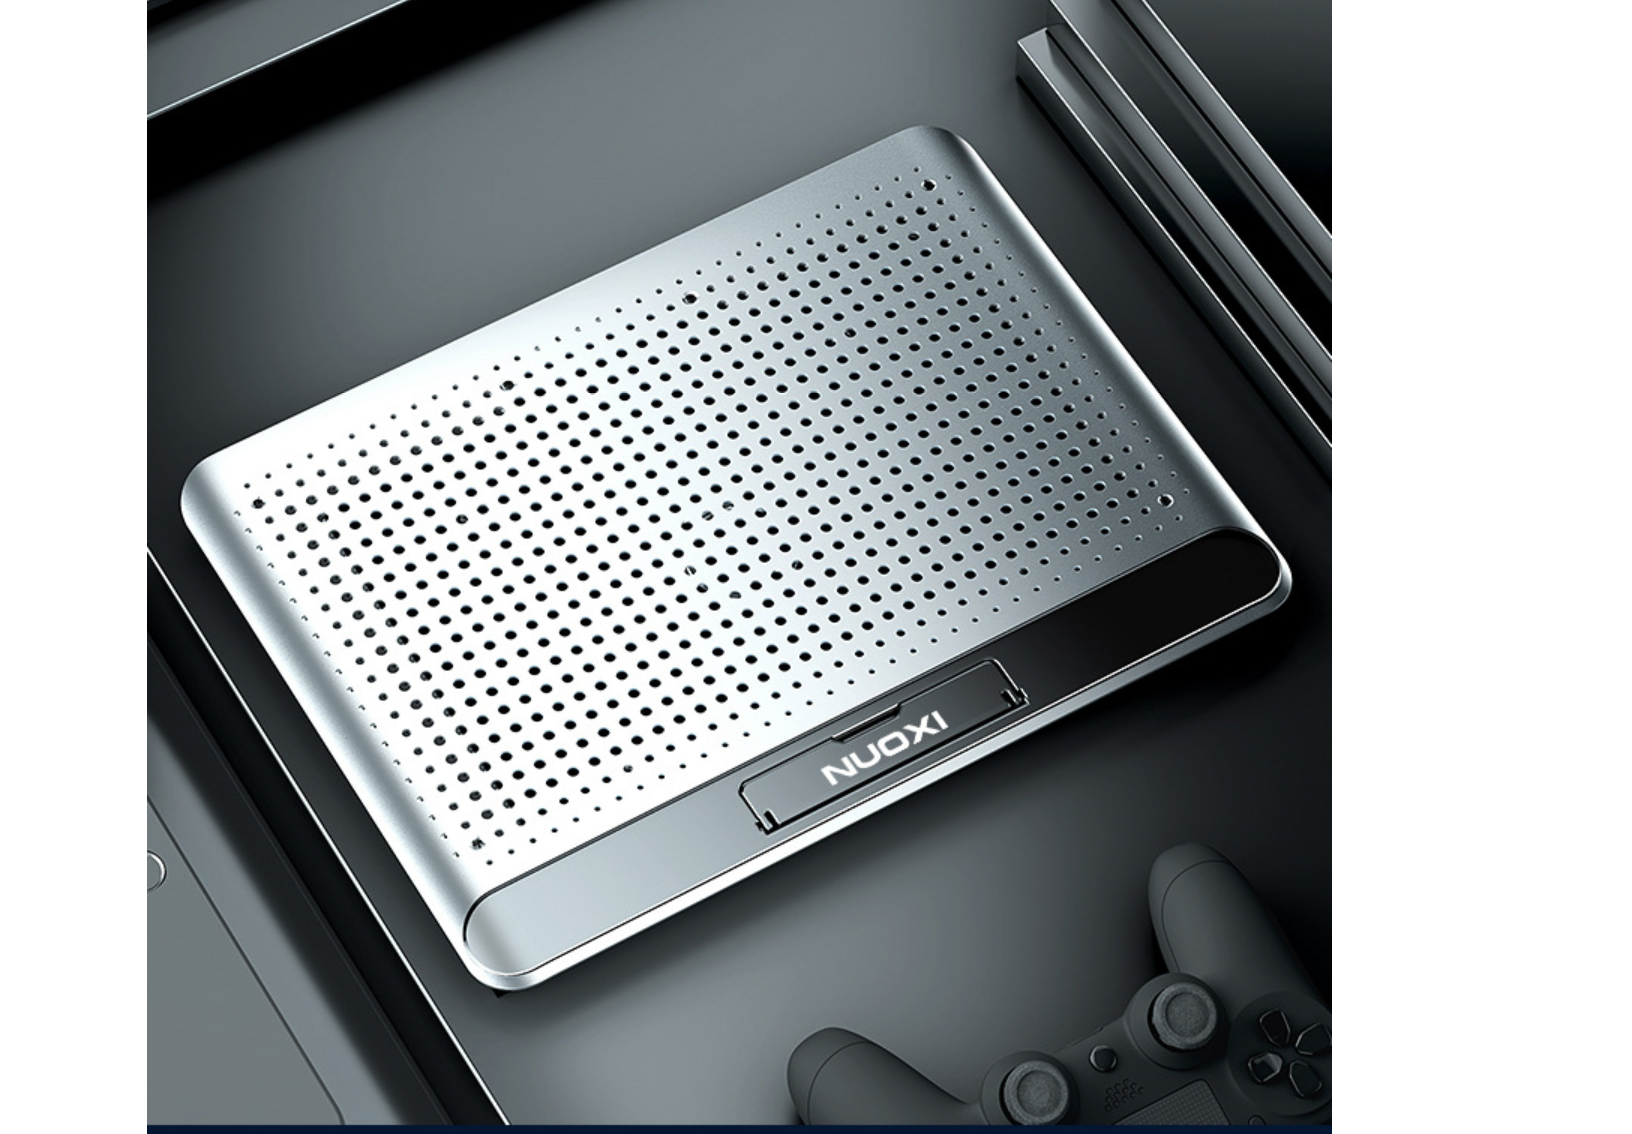 NUOXI-Cooling-Laptop-Stand-Six-Modes-Portable-Adjustable-Lifting-Computer-Bracket-Dual-USB-Port-Disp-1631009